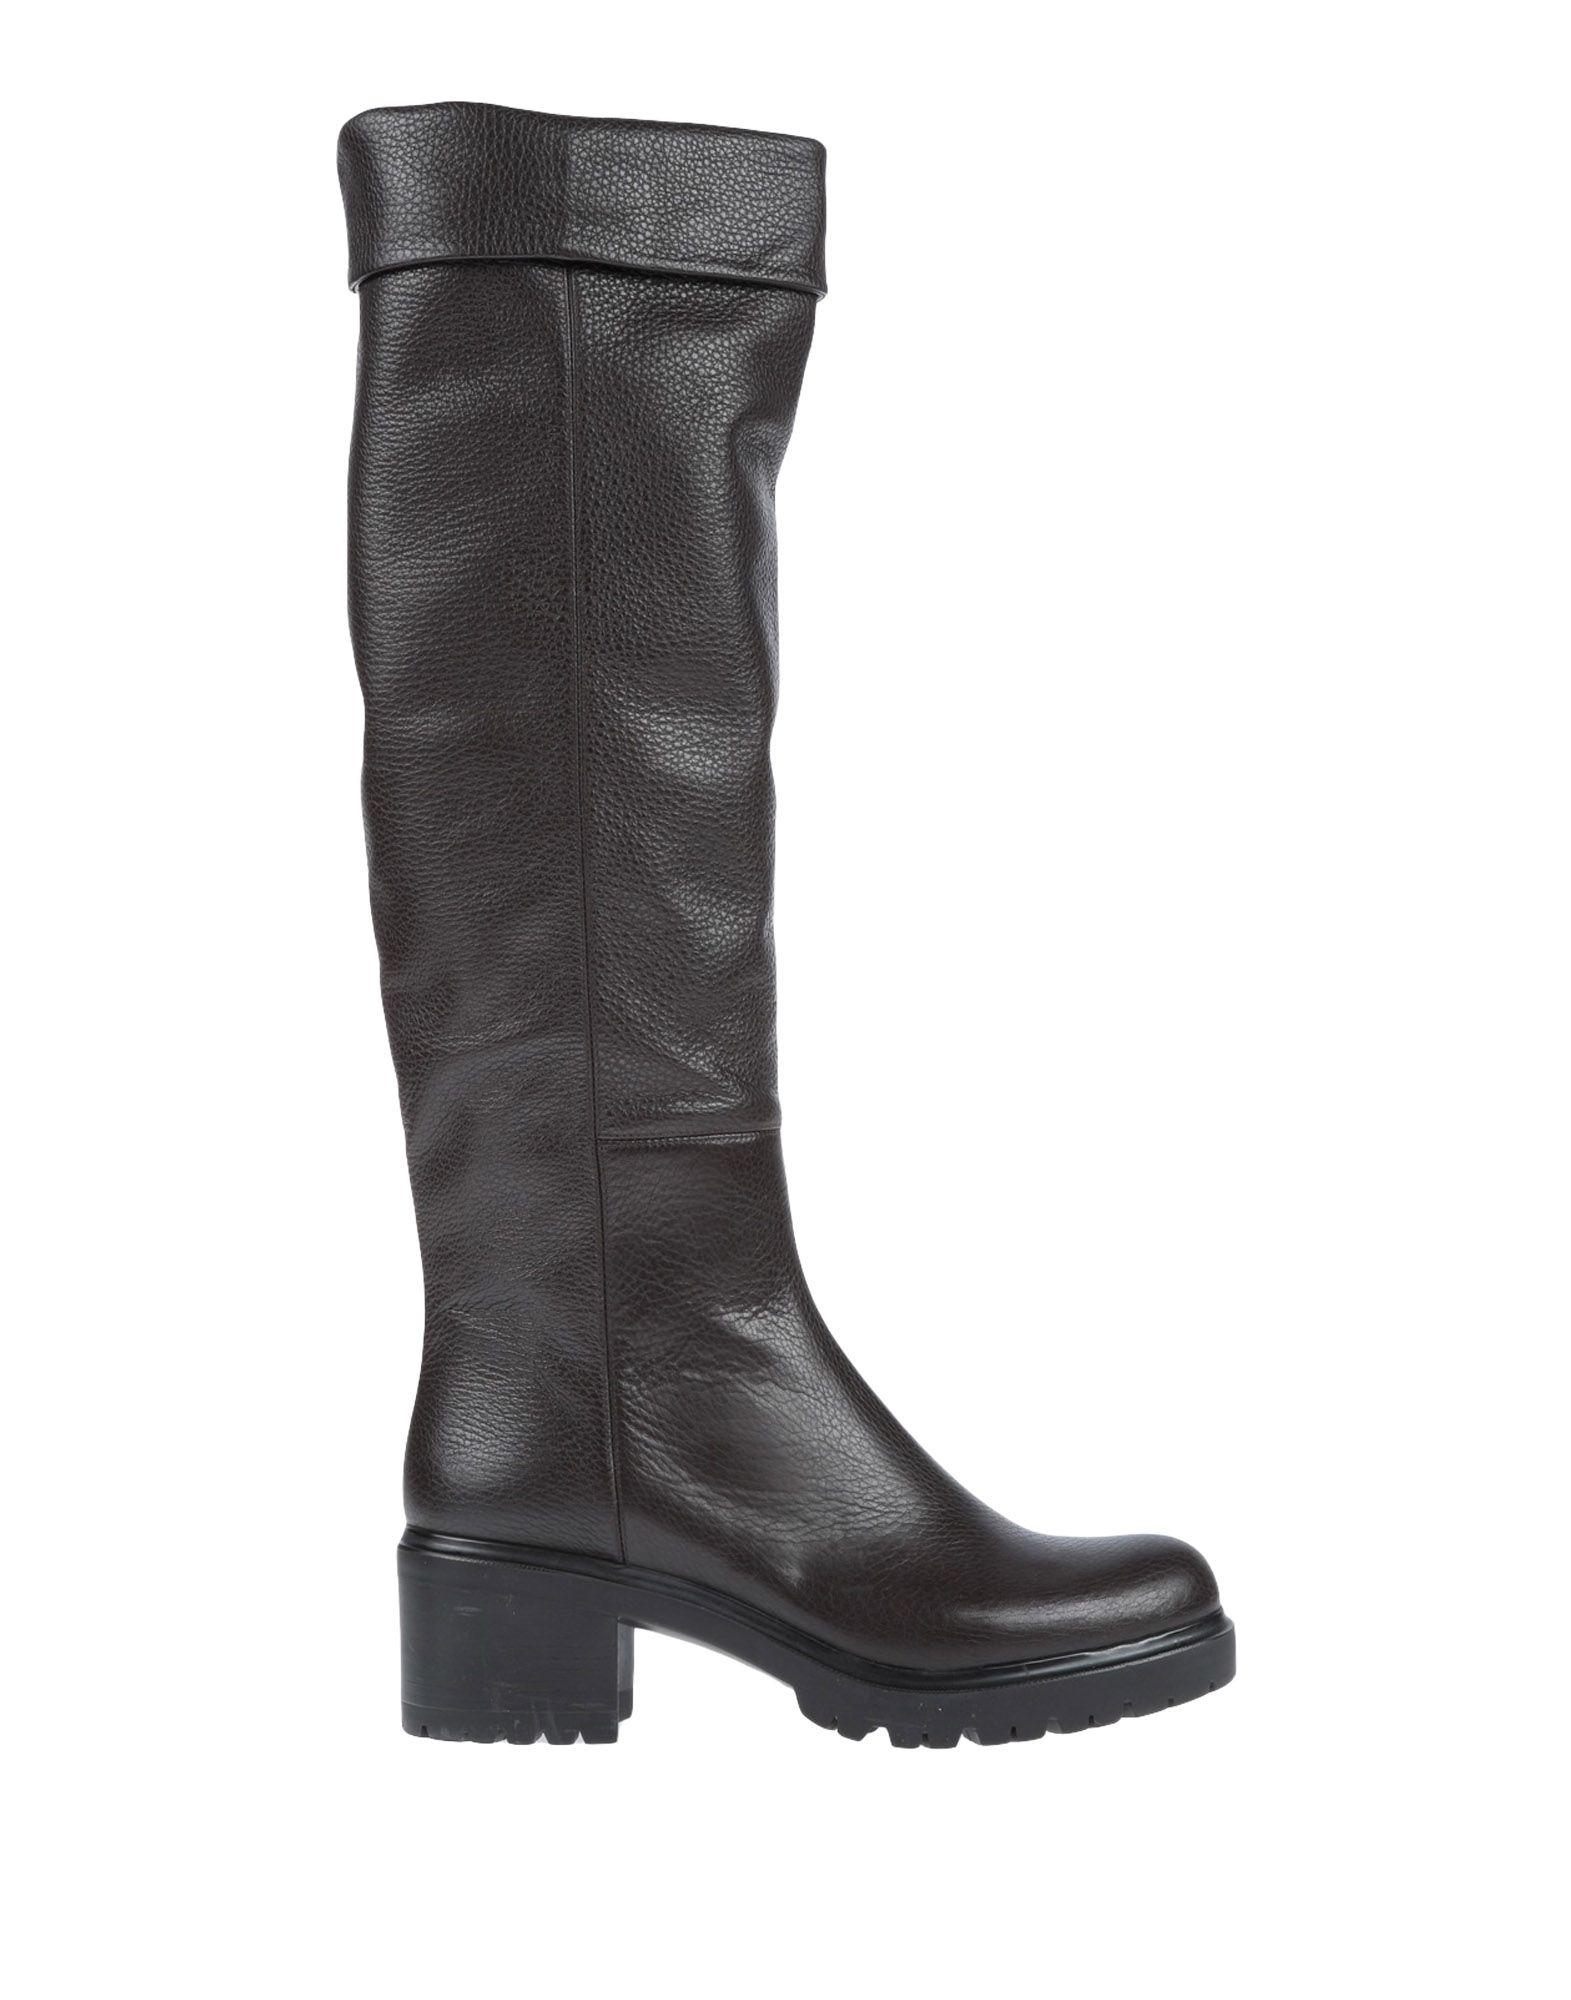 Loriblu Leather Boots in Dark Brown (Brown) - Lyst